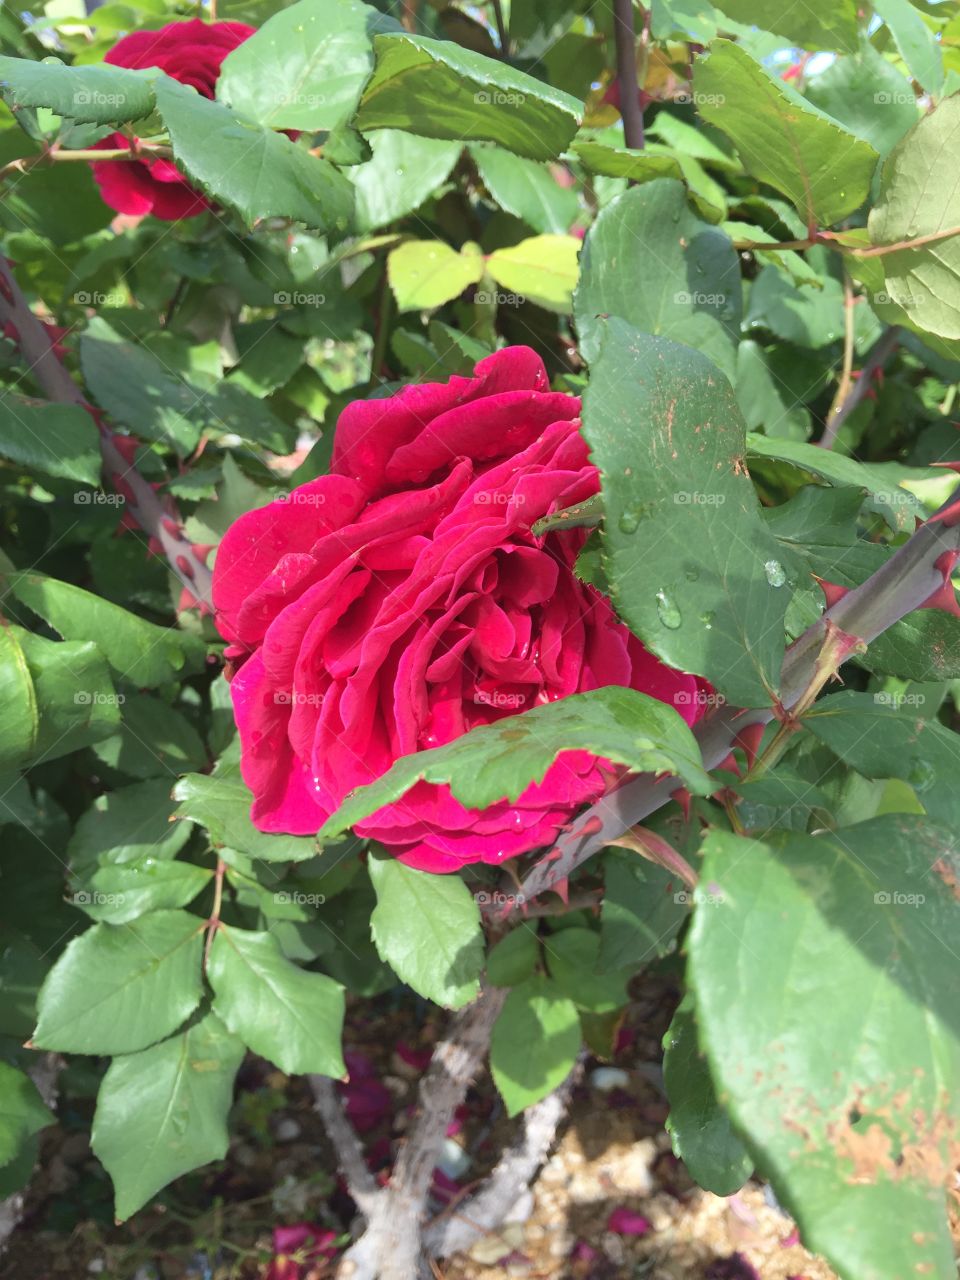 Rose
Red